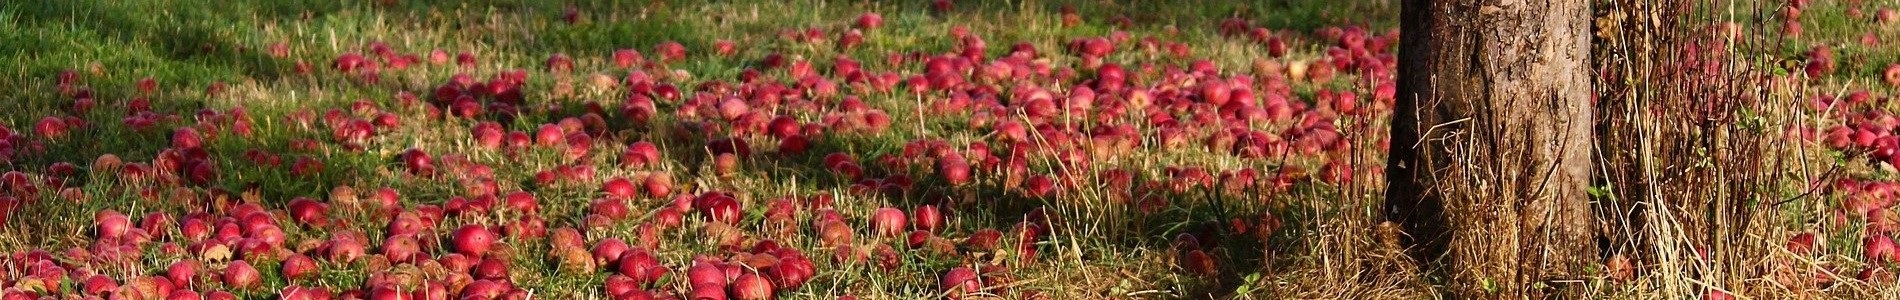 Fallen apples under a tree